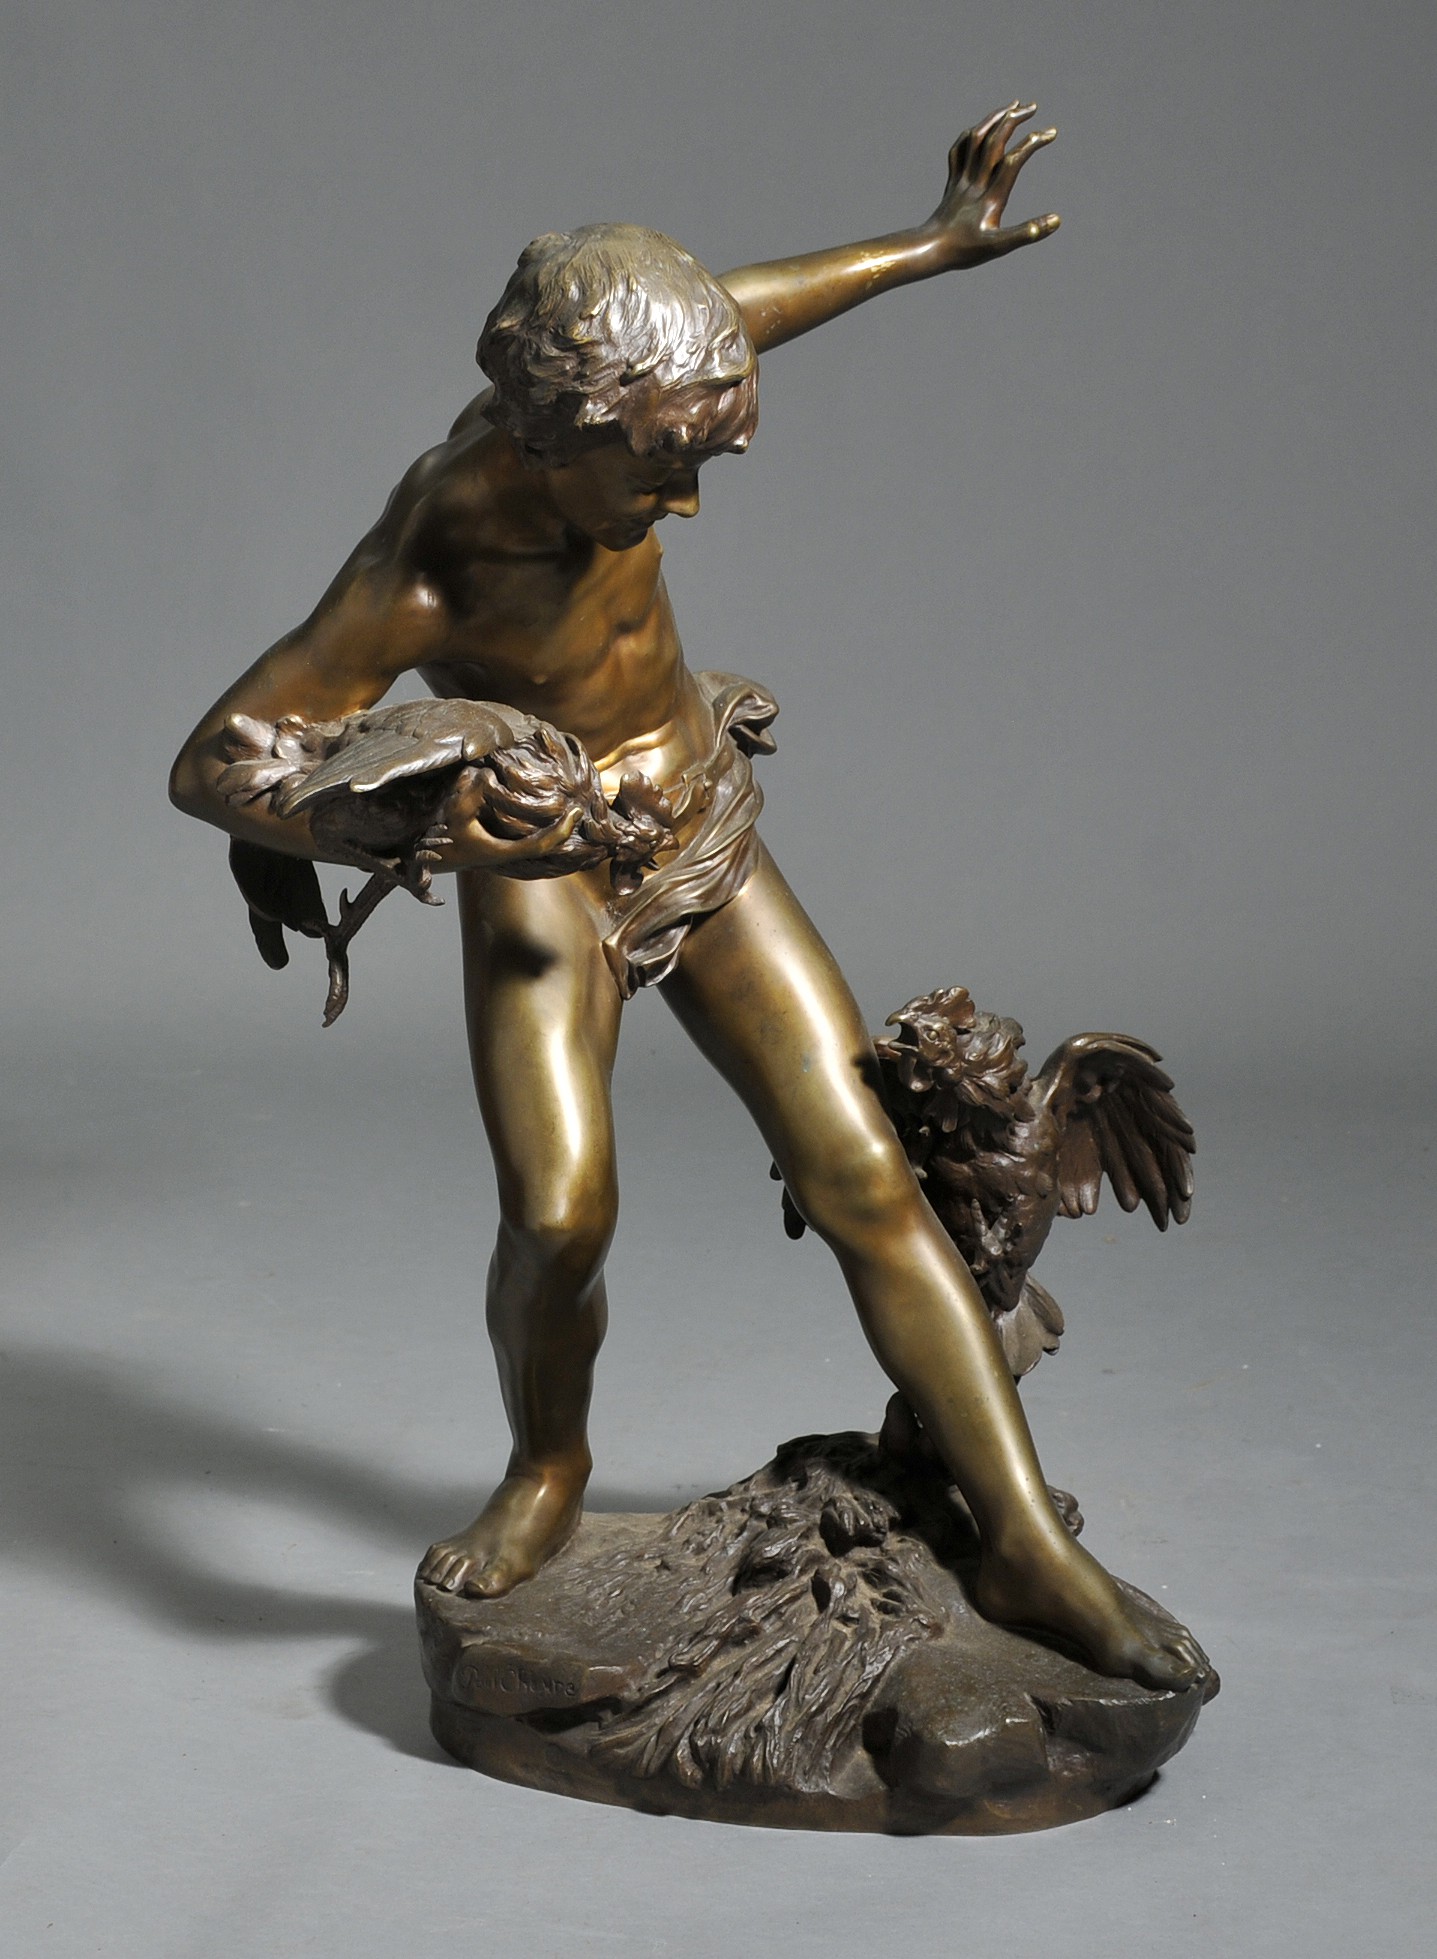 Exceptional bronze sculpture by Paul Chevre